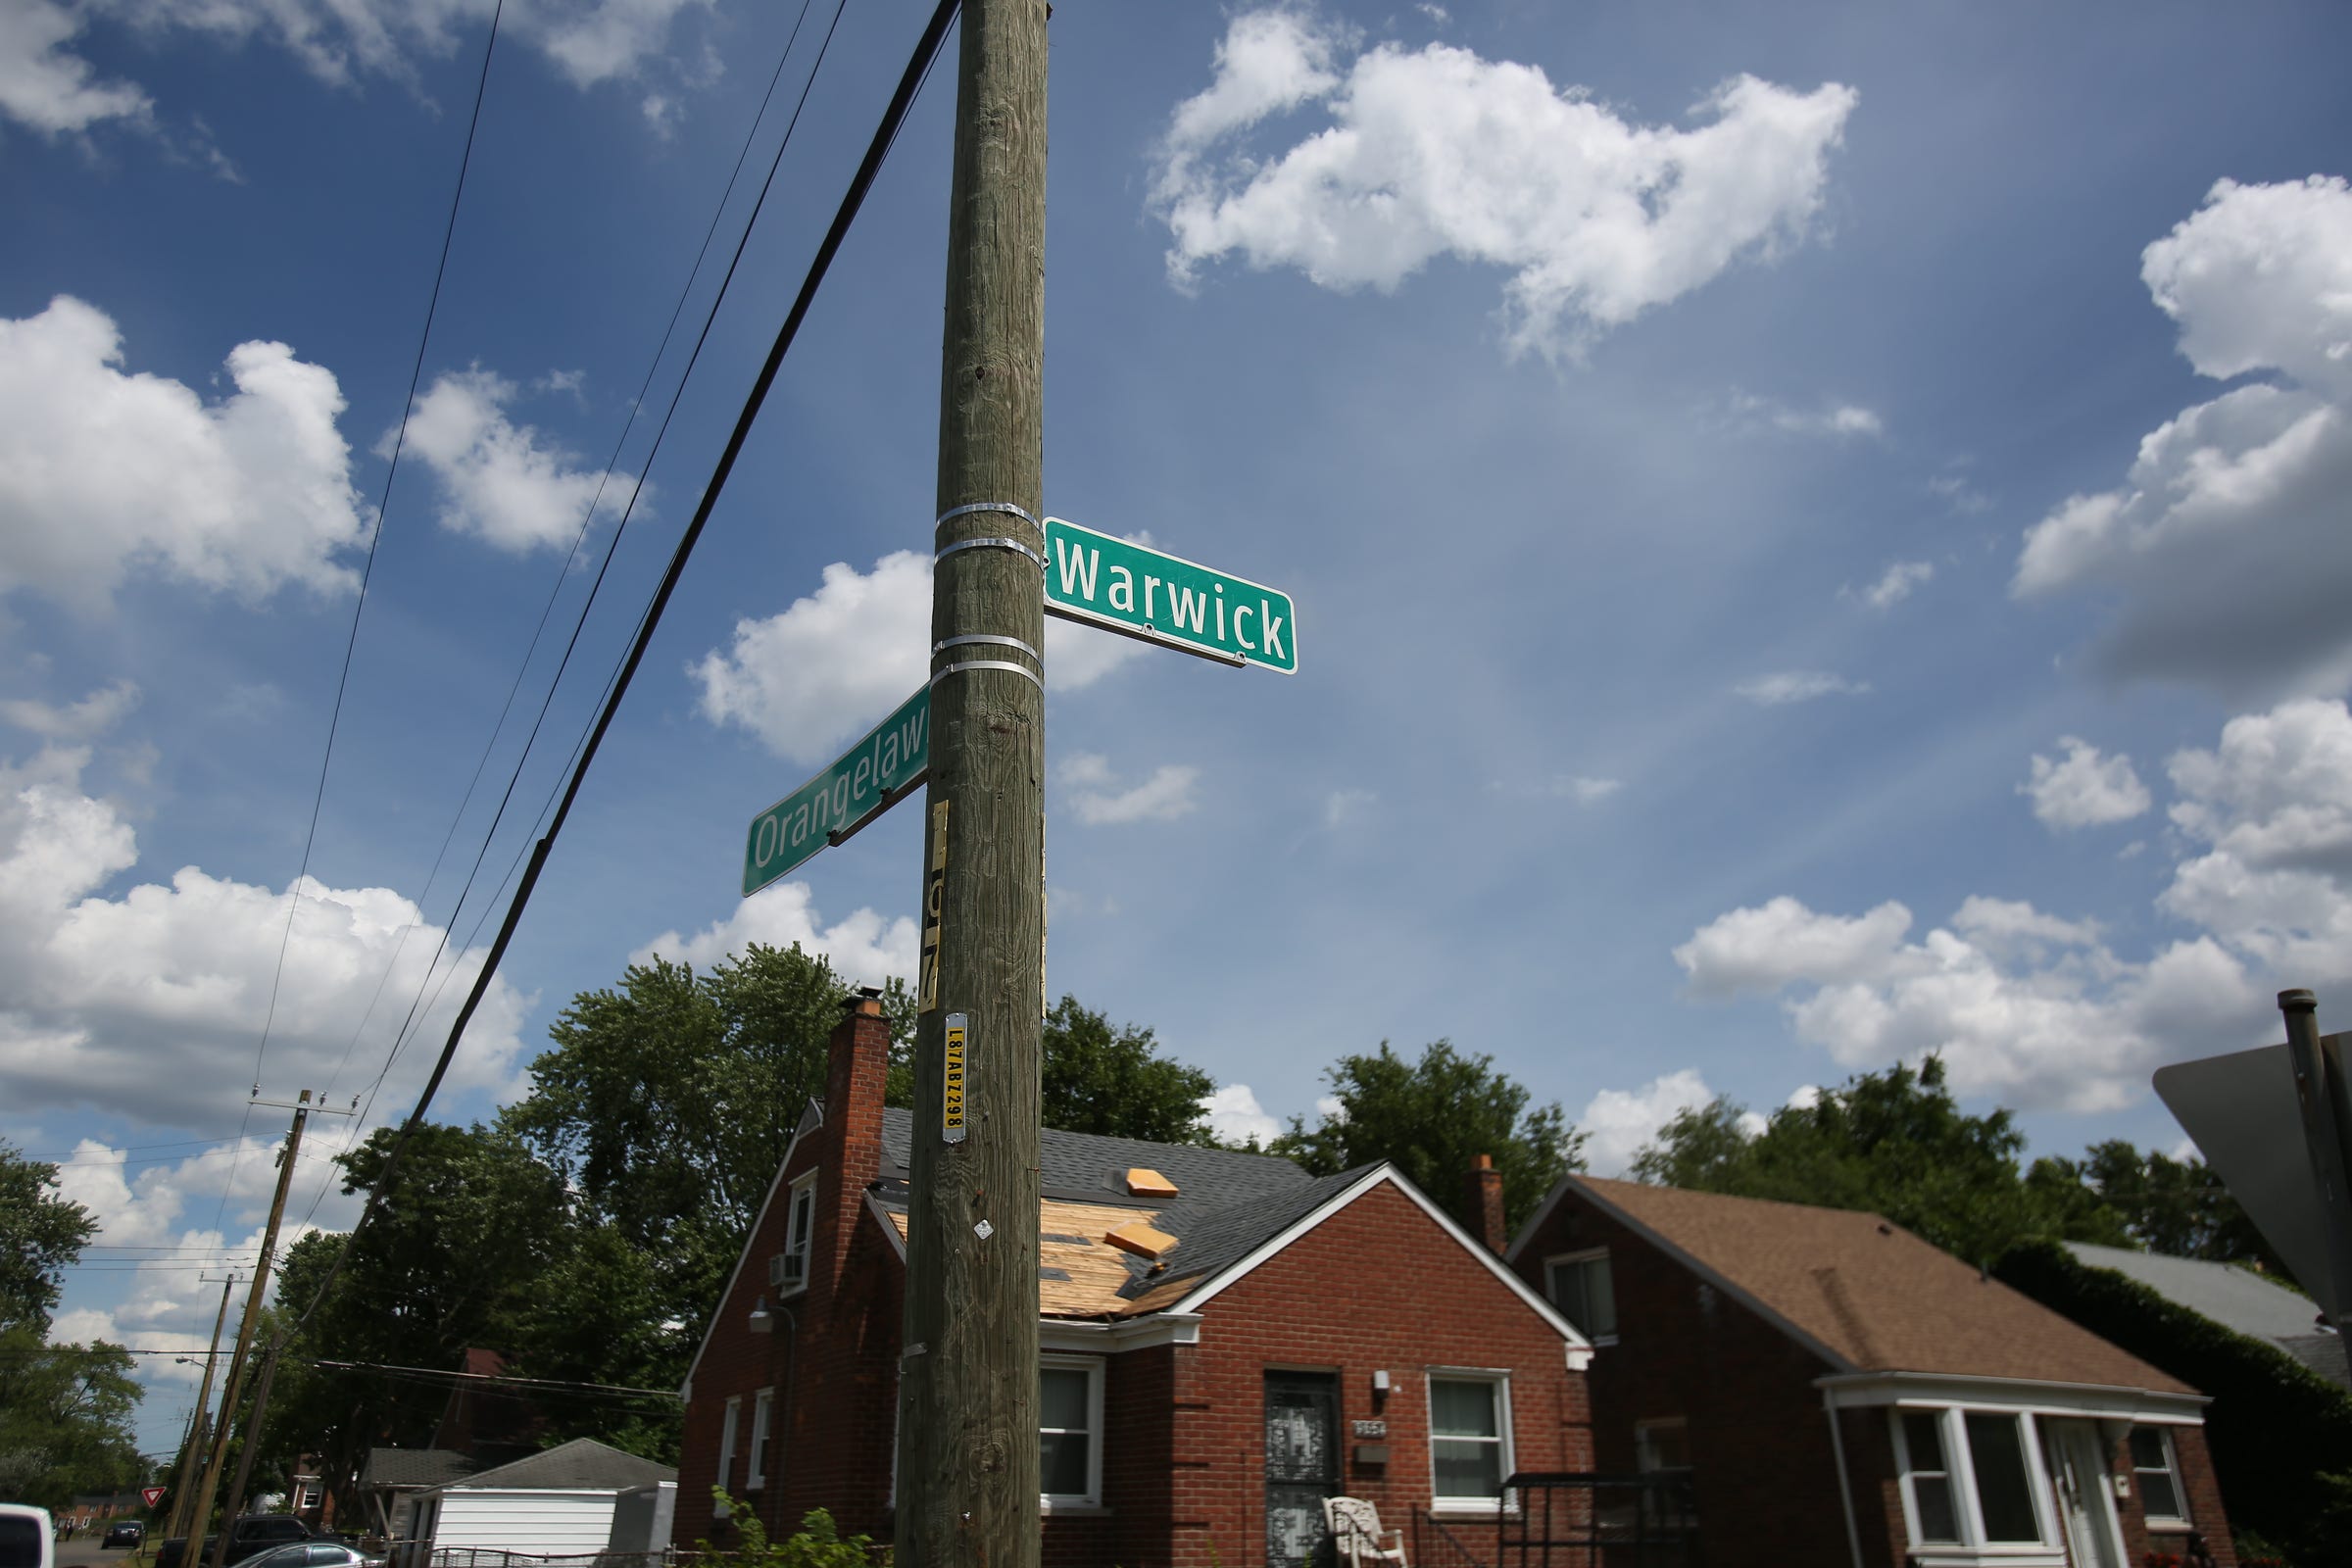 Warwick Street, a street on the westside of Detroit has been identified as being a neighborhood under a severe flood risk.